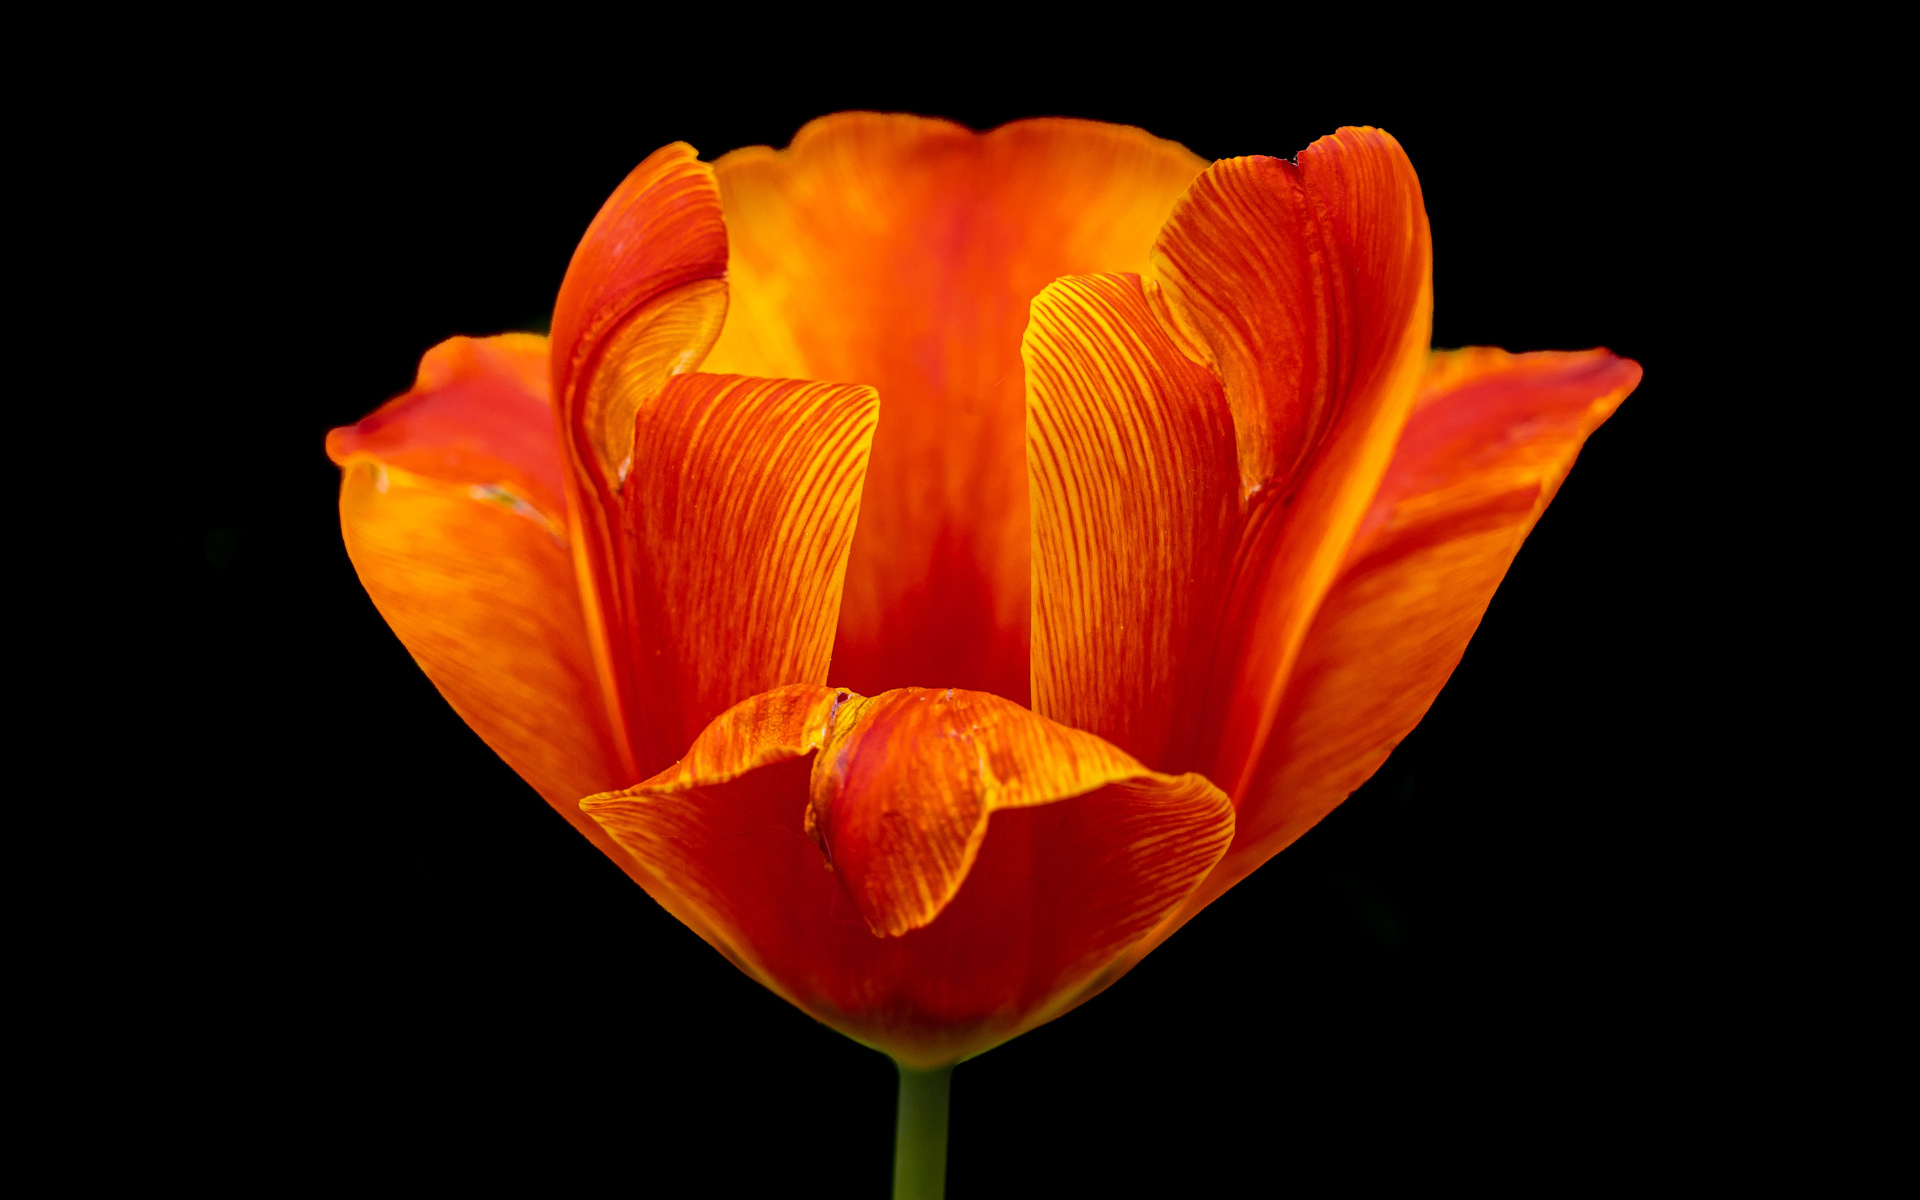 Orange tulip on a black background close-up